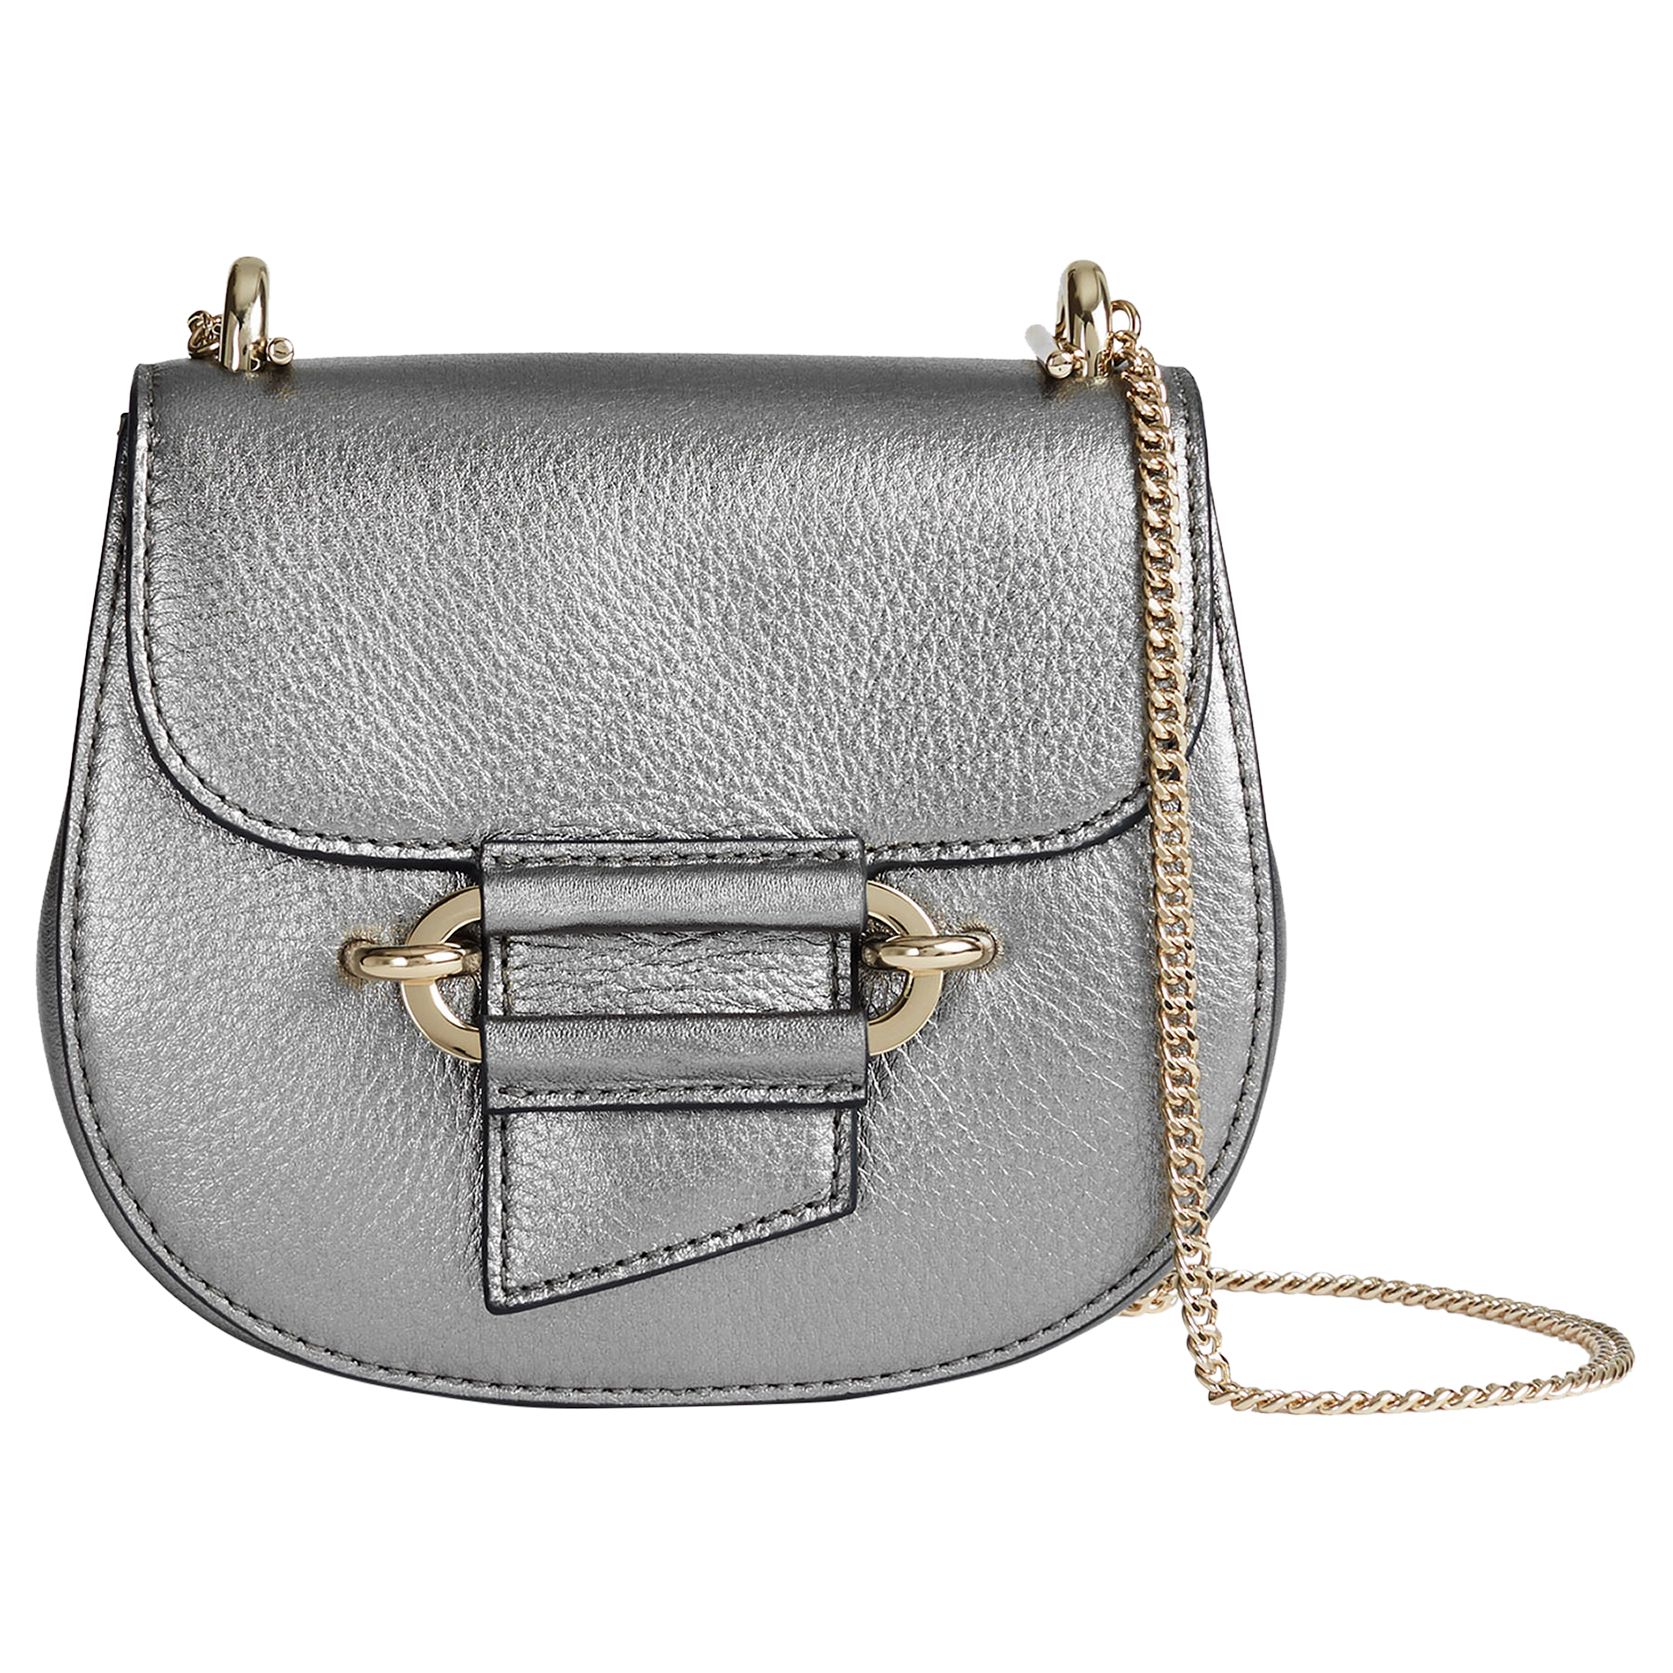 maltby leather handbag